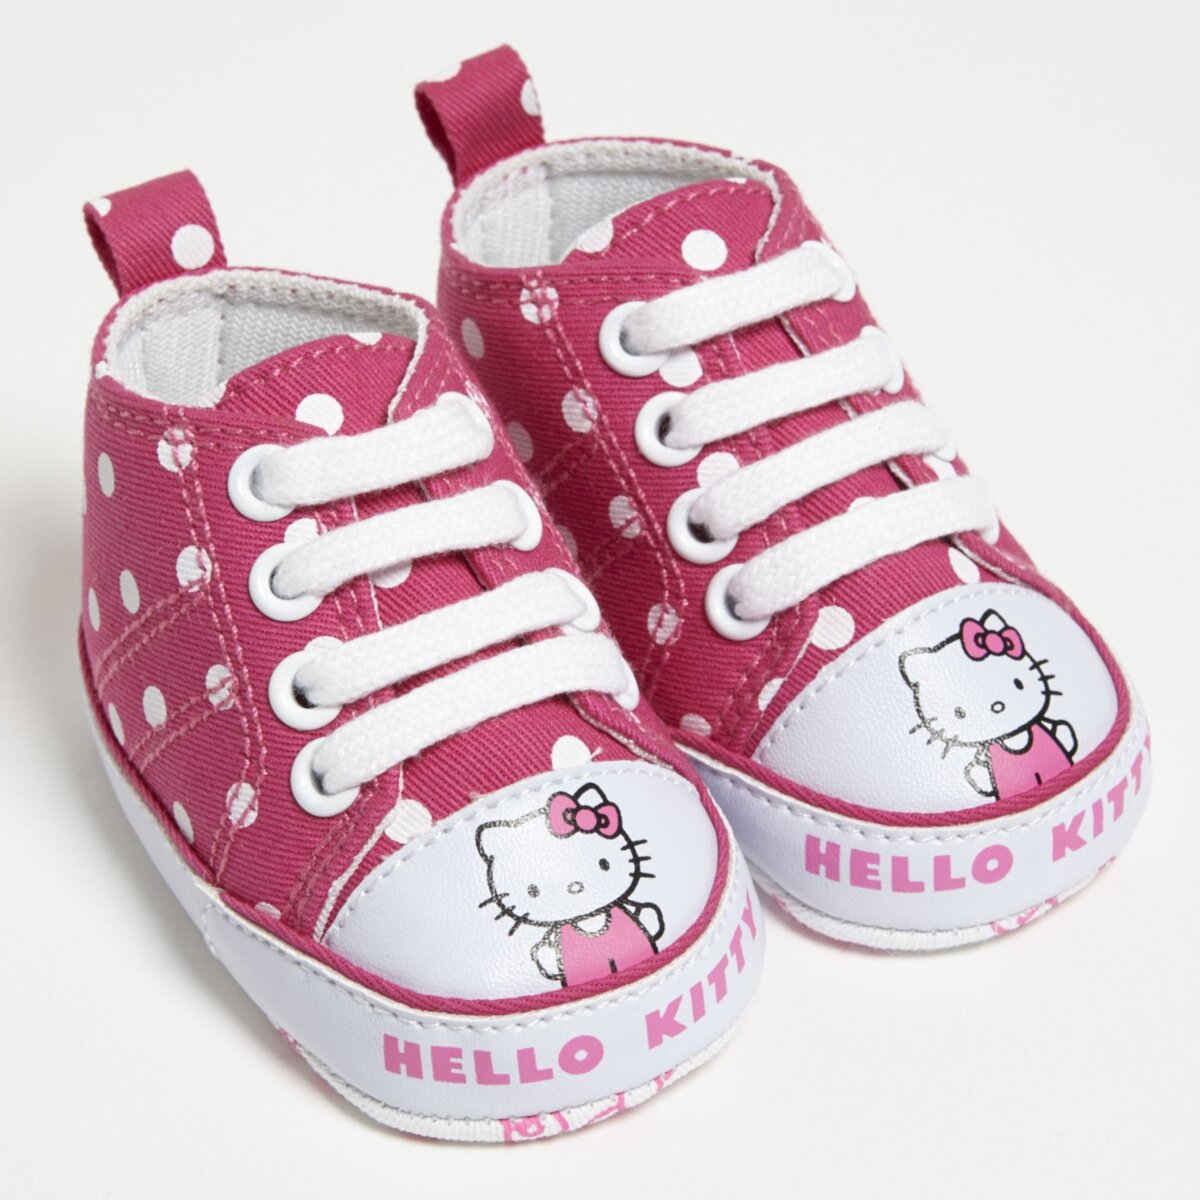 HELLO KITTY Chaussures Hello Kitty bébé